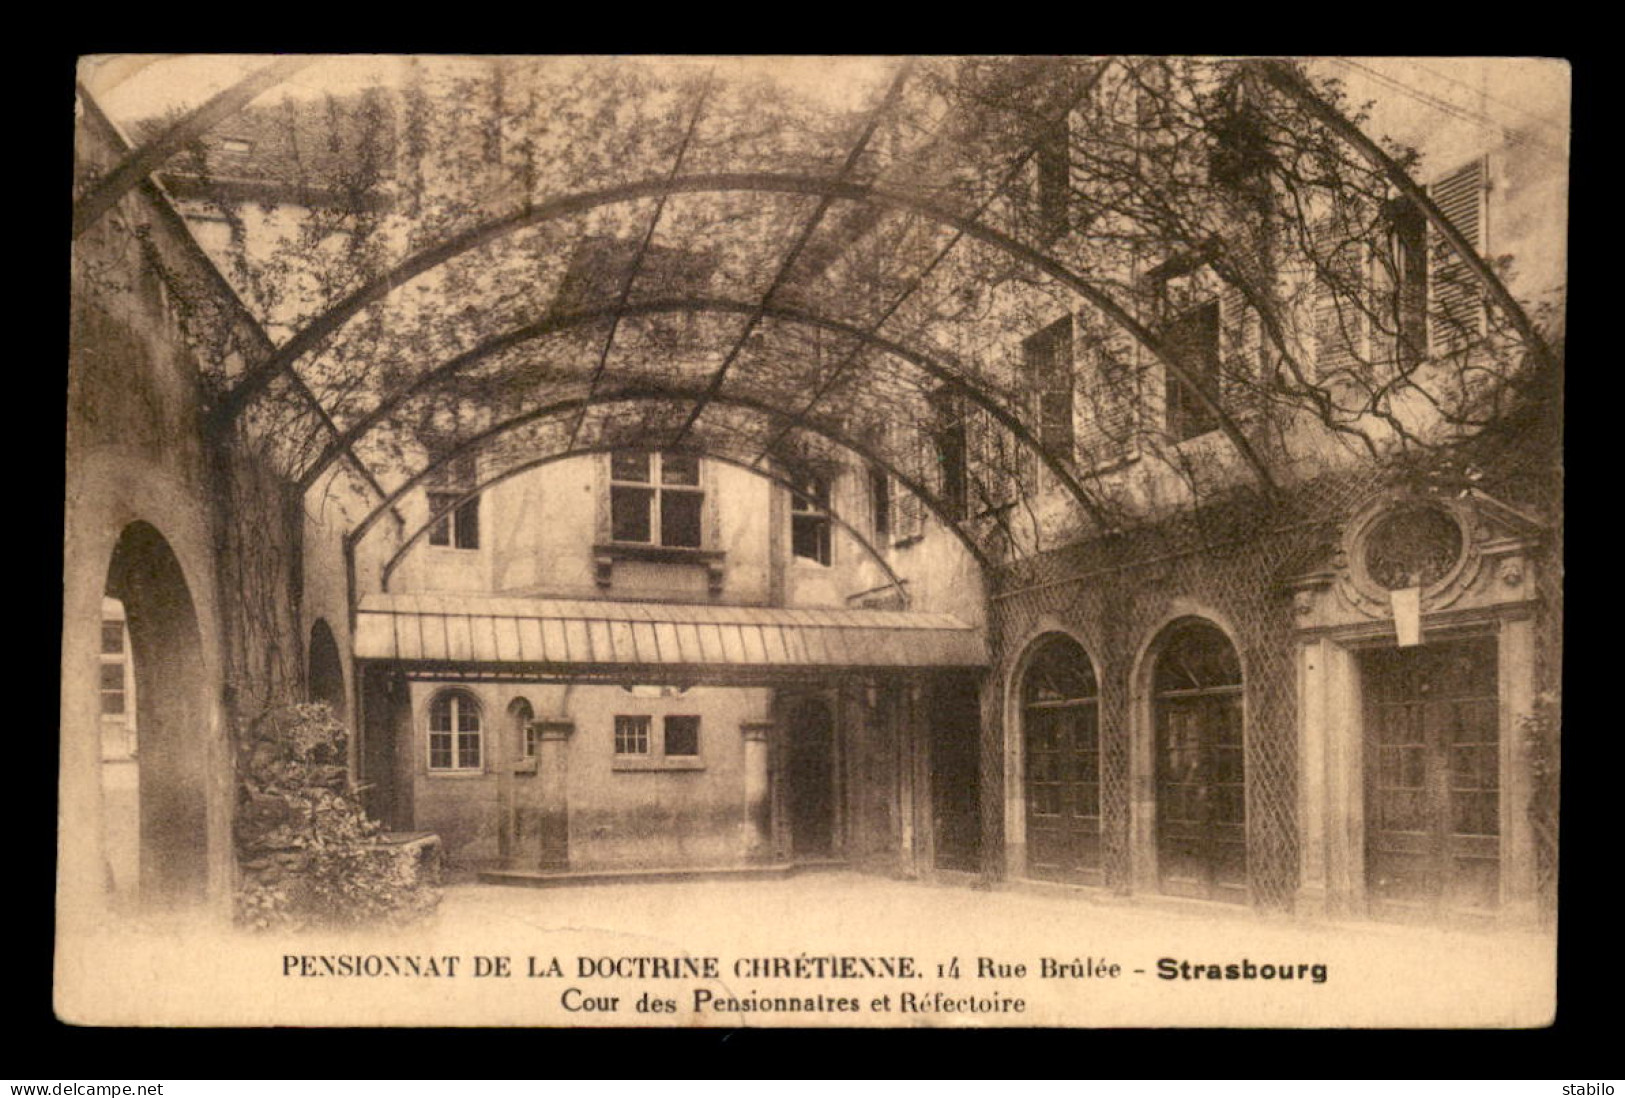 67 - STRASBOURG - PENSIONNAT DE LA DOCTRINE CHRETIENNE, 14 RUE BRULEE - COUR ET REFECTOIRE - VOIR ETAT - Strasbourg